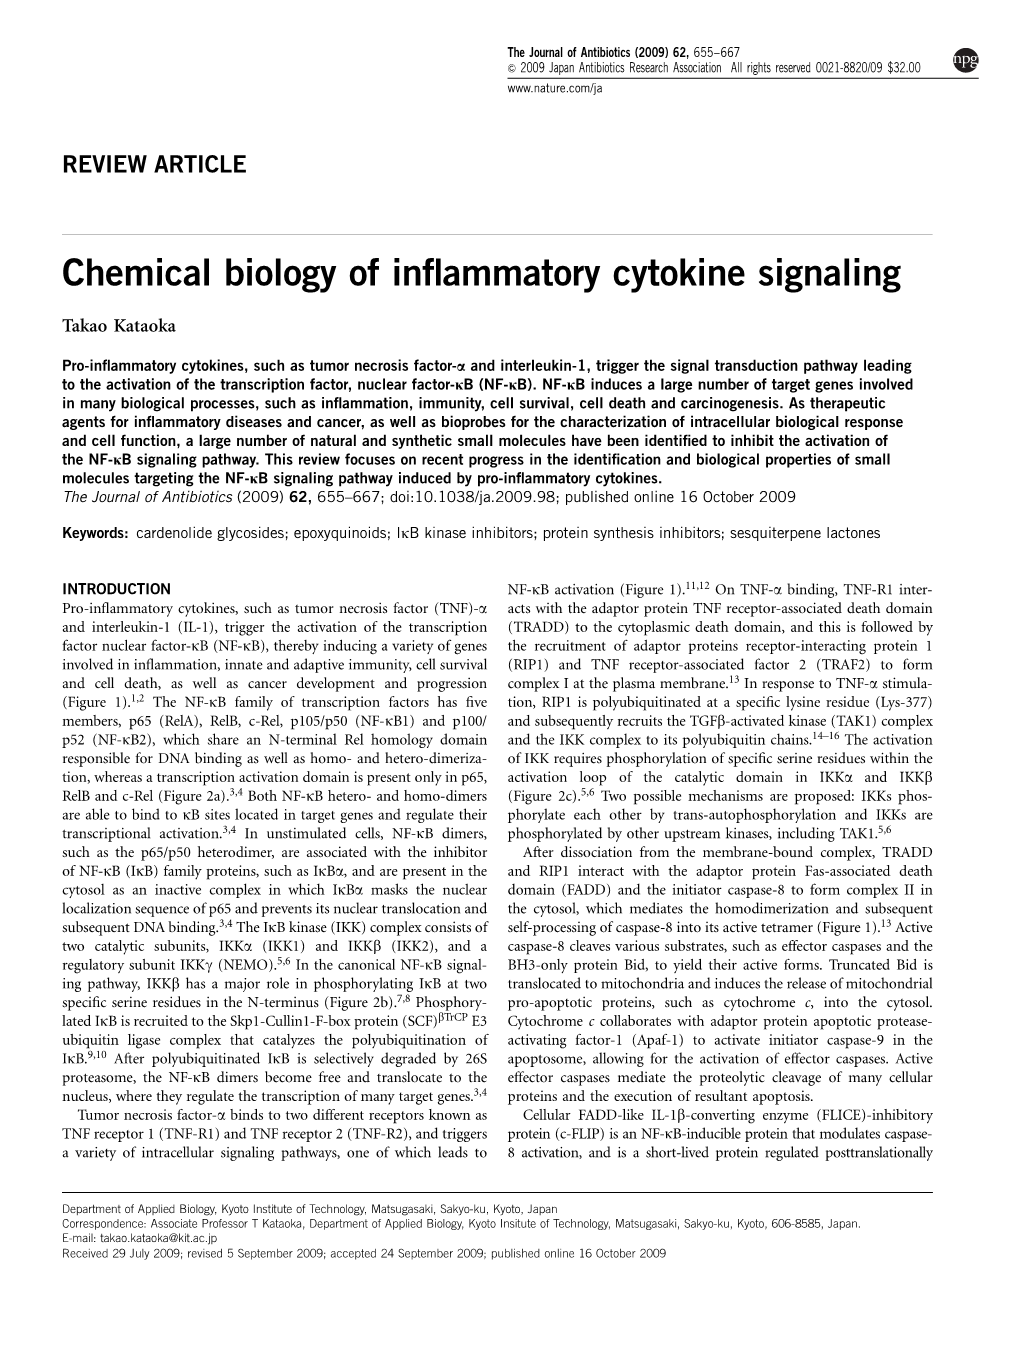 Chemical Biology of Inflammatory Cytokine Signaling